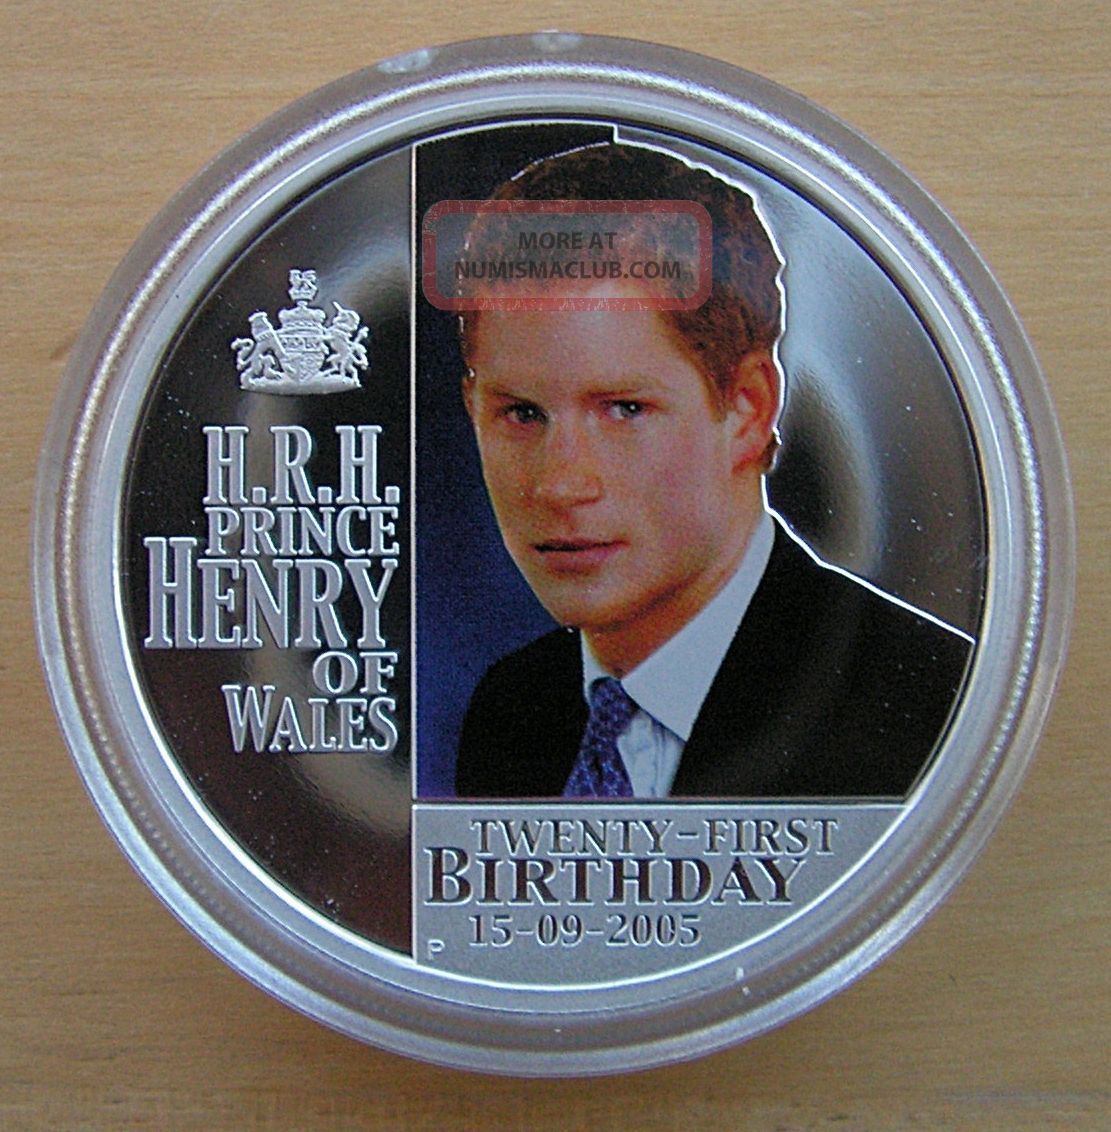 Prince Henry Of Wales 1oz Silver Proof Coin 2005 $1 Australia: Prince Harry Australia & Oceania photo